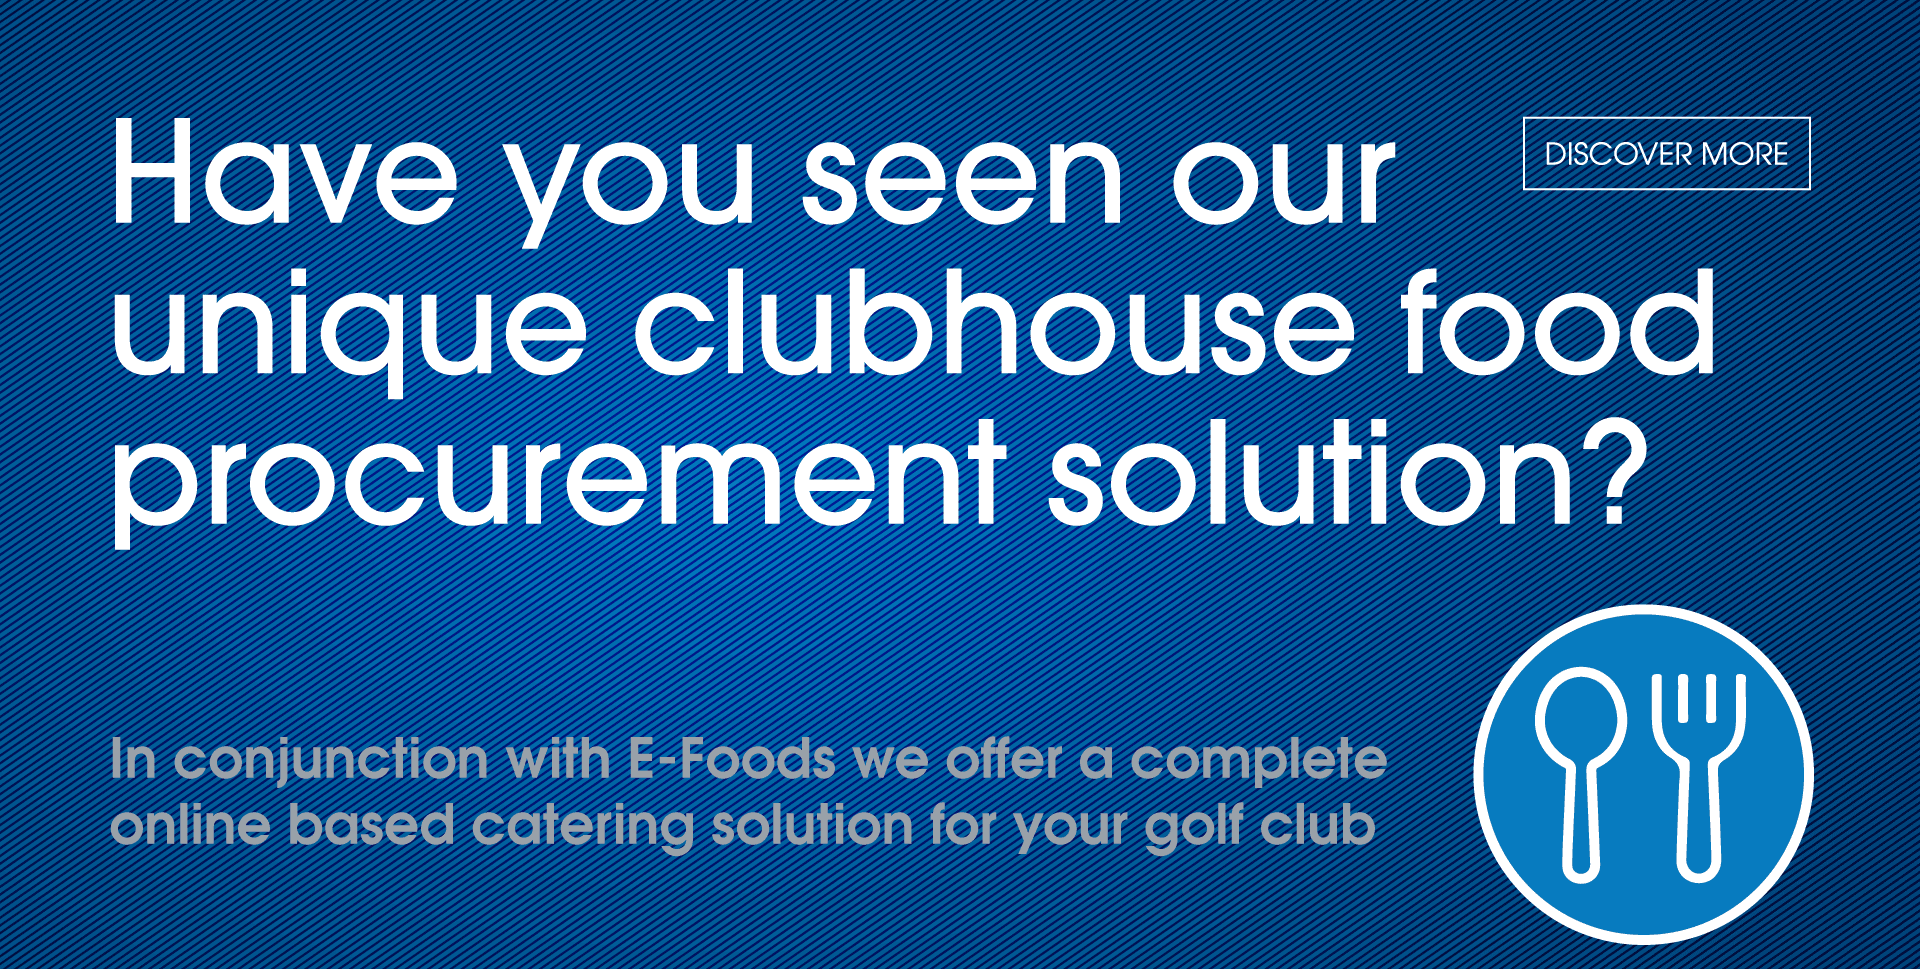 Have you seen our unique clubhouse food procurement solution?